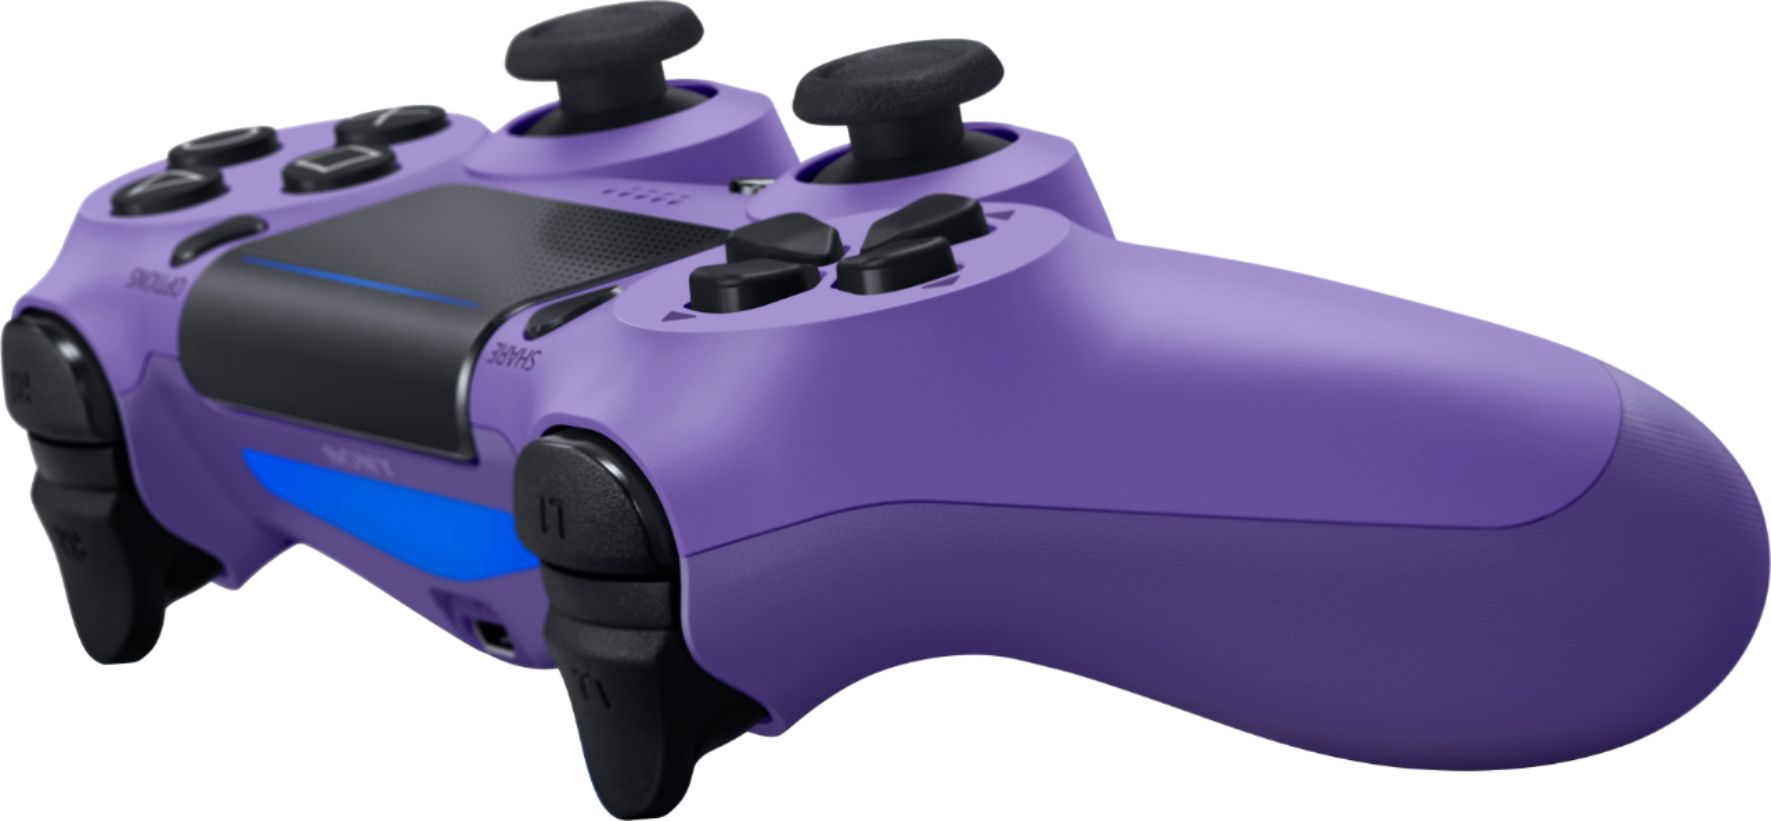 pa4 purple controller